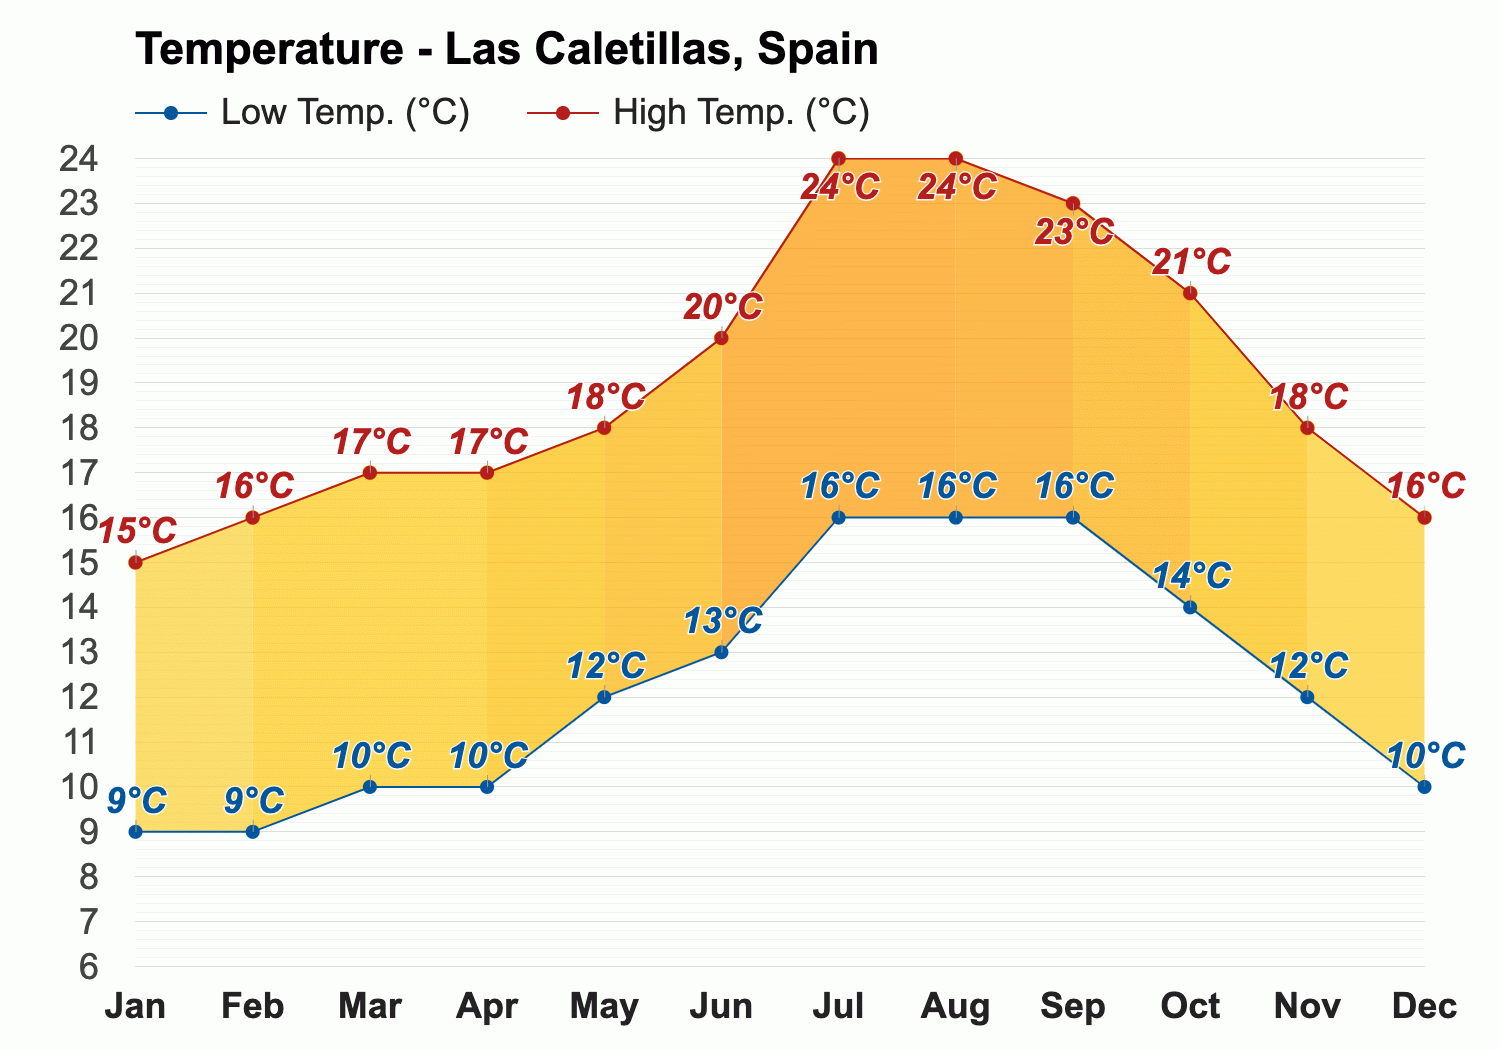 January Weather forecast - Winter forecast - Las Caletillas, Spain